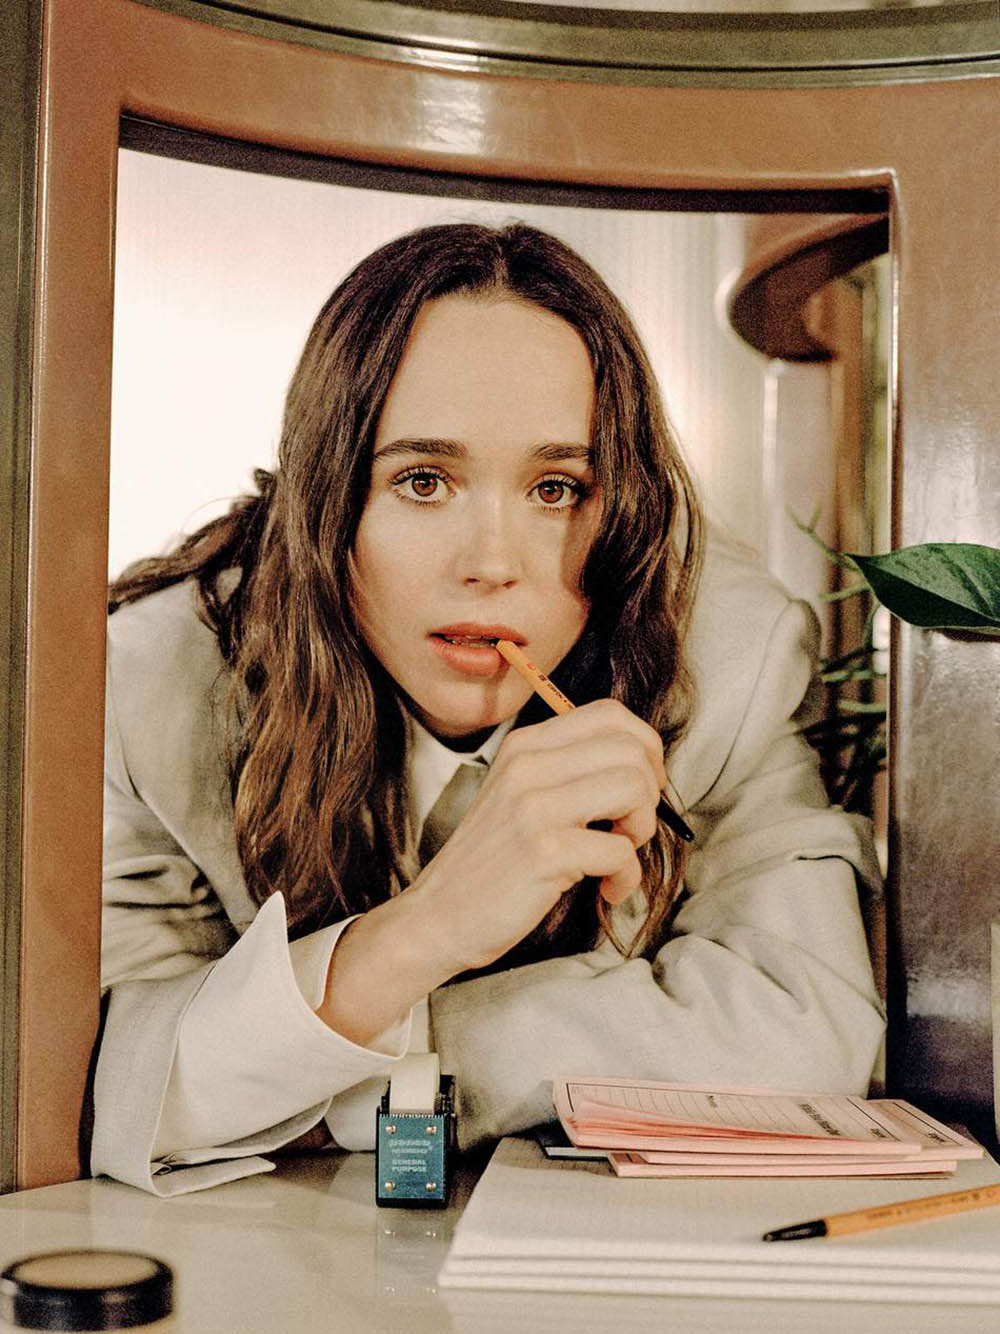 Ellen Page covers Porter Edit February 22nd, 2019 by Tiffany Nicholson